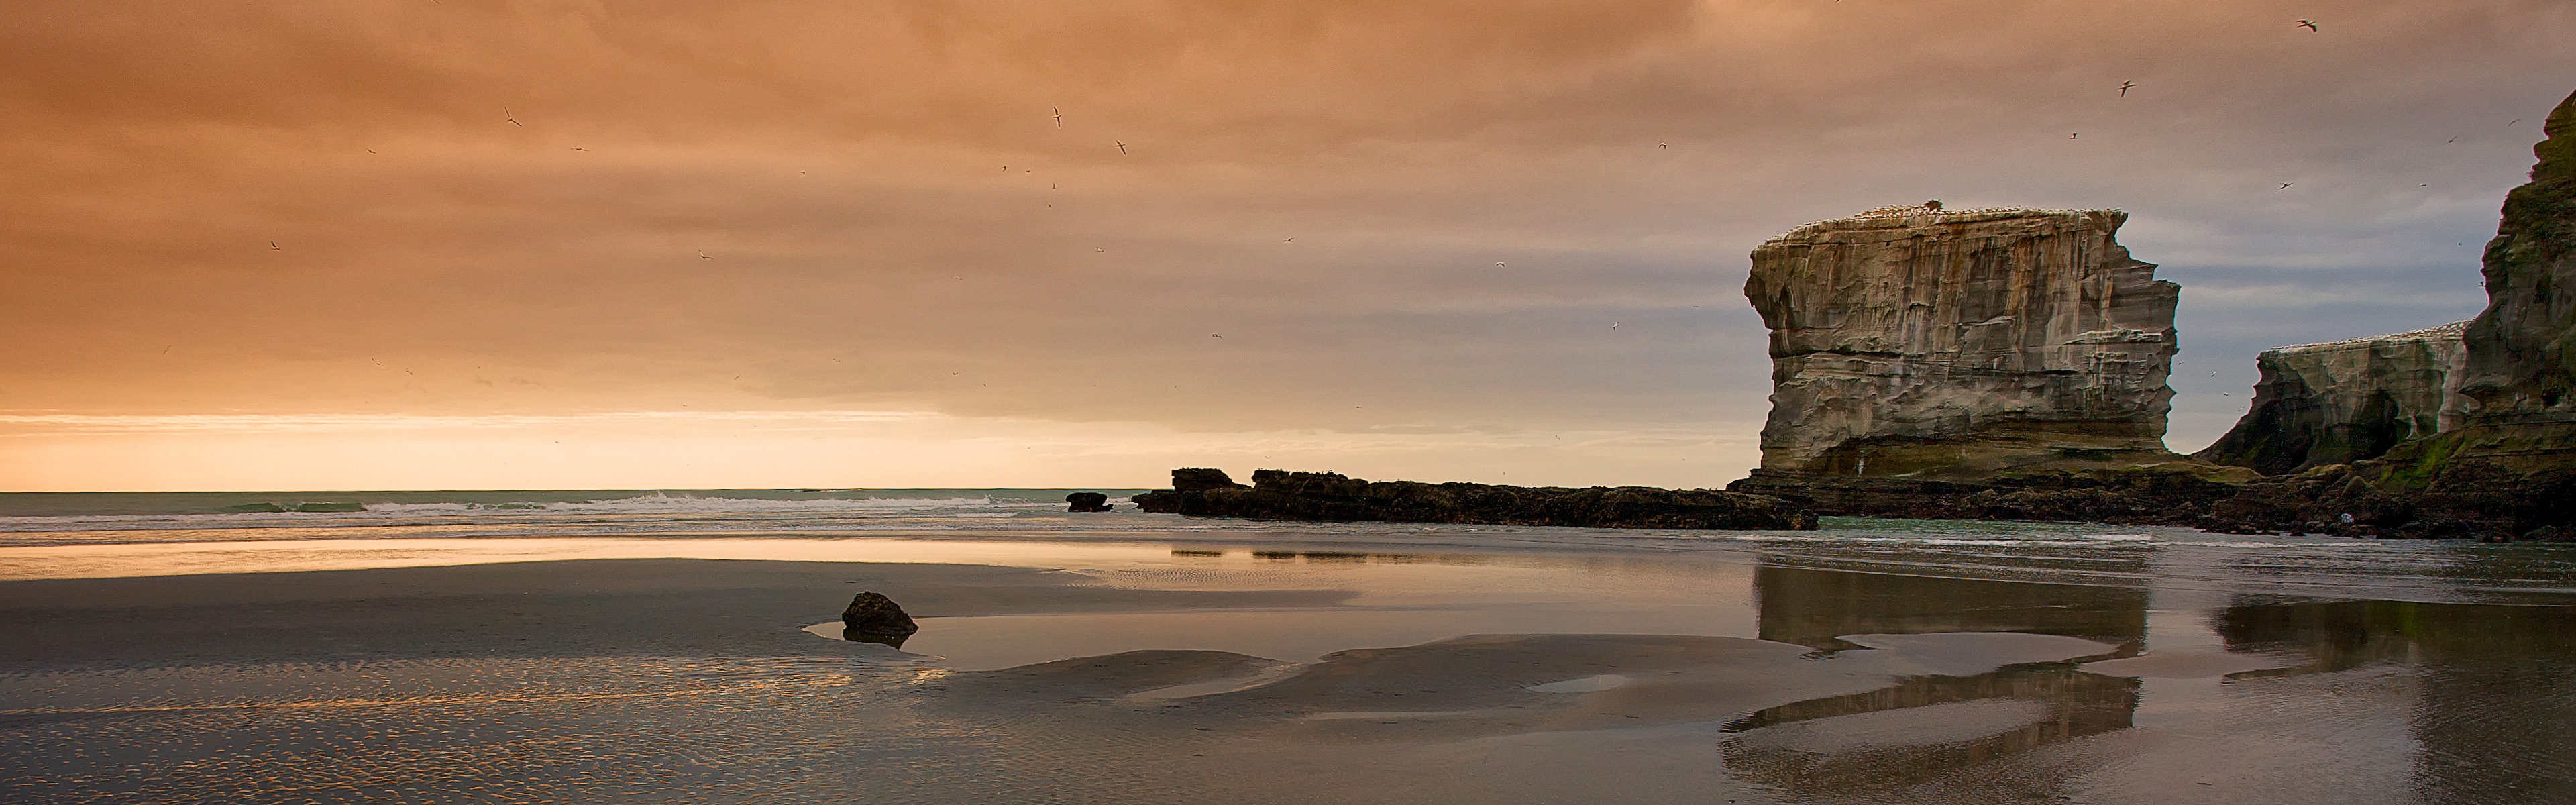 Krásná pláž západ slunce, Windows 8 panoramatické, širokoúhlé tapety #9 - 3840x1200